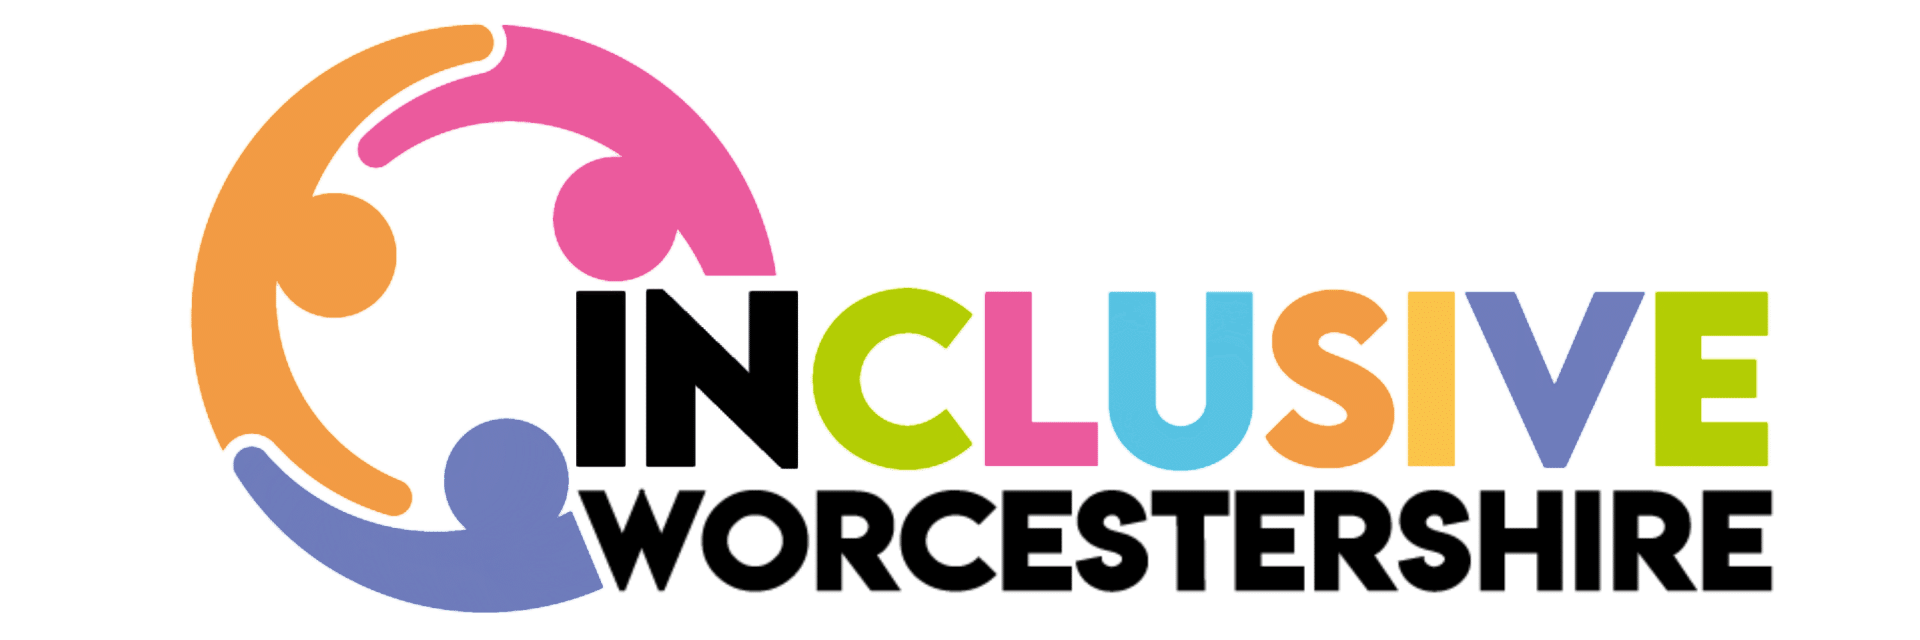 INclusive Worcestershire brand logo